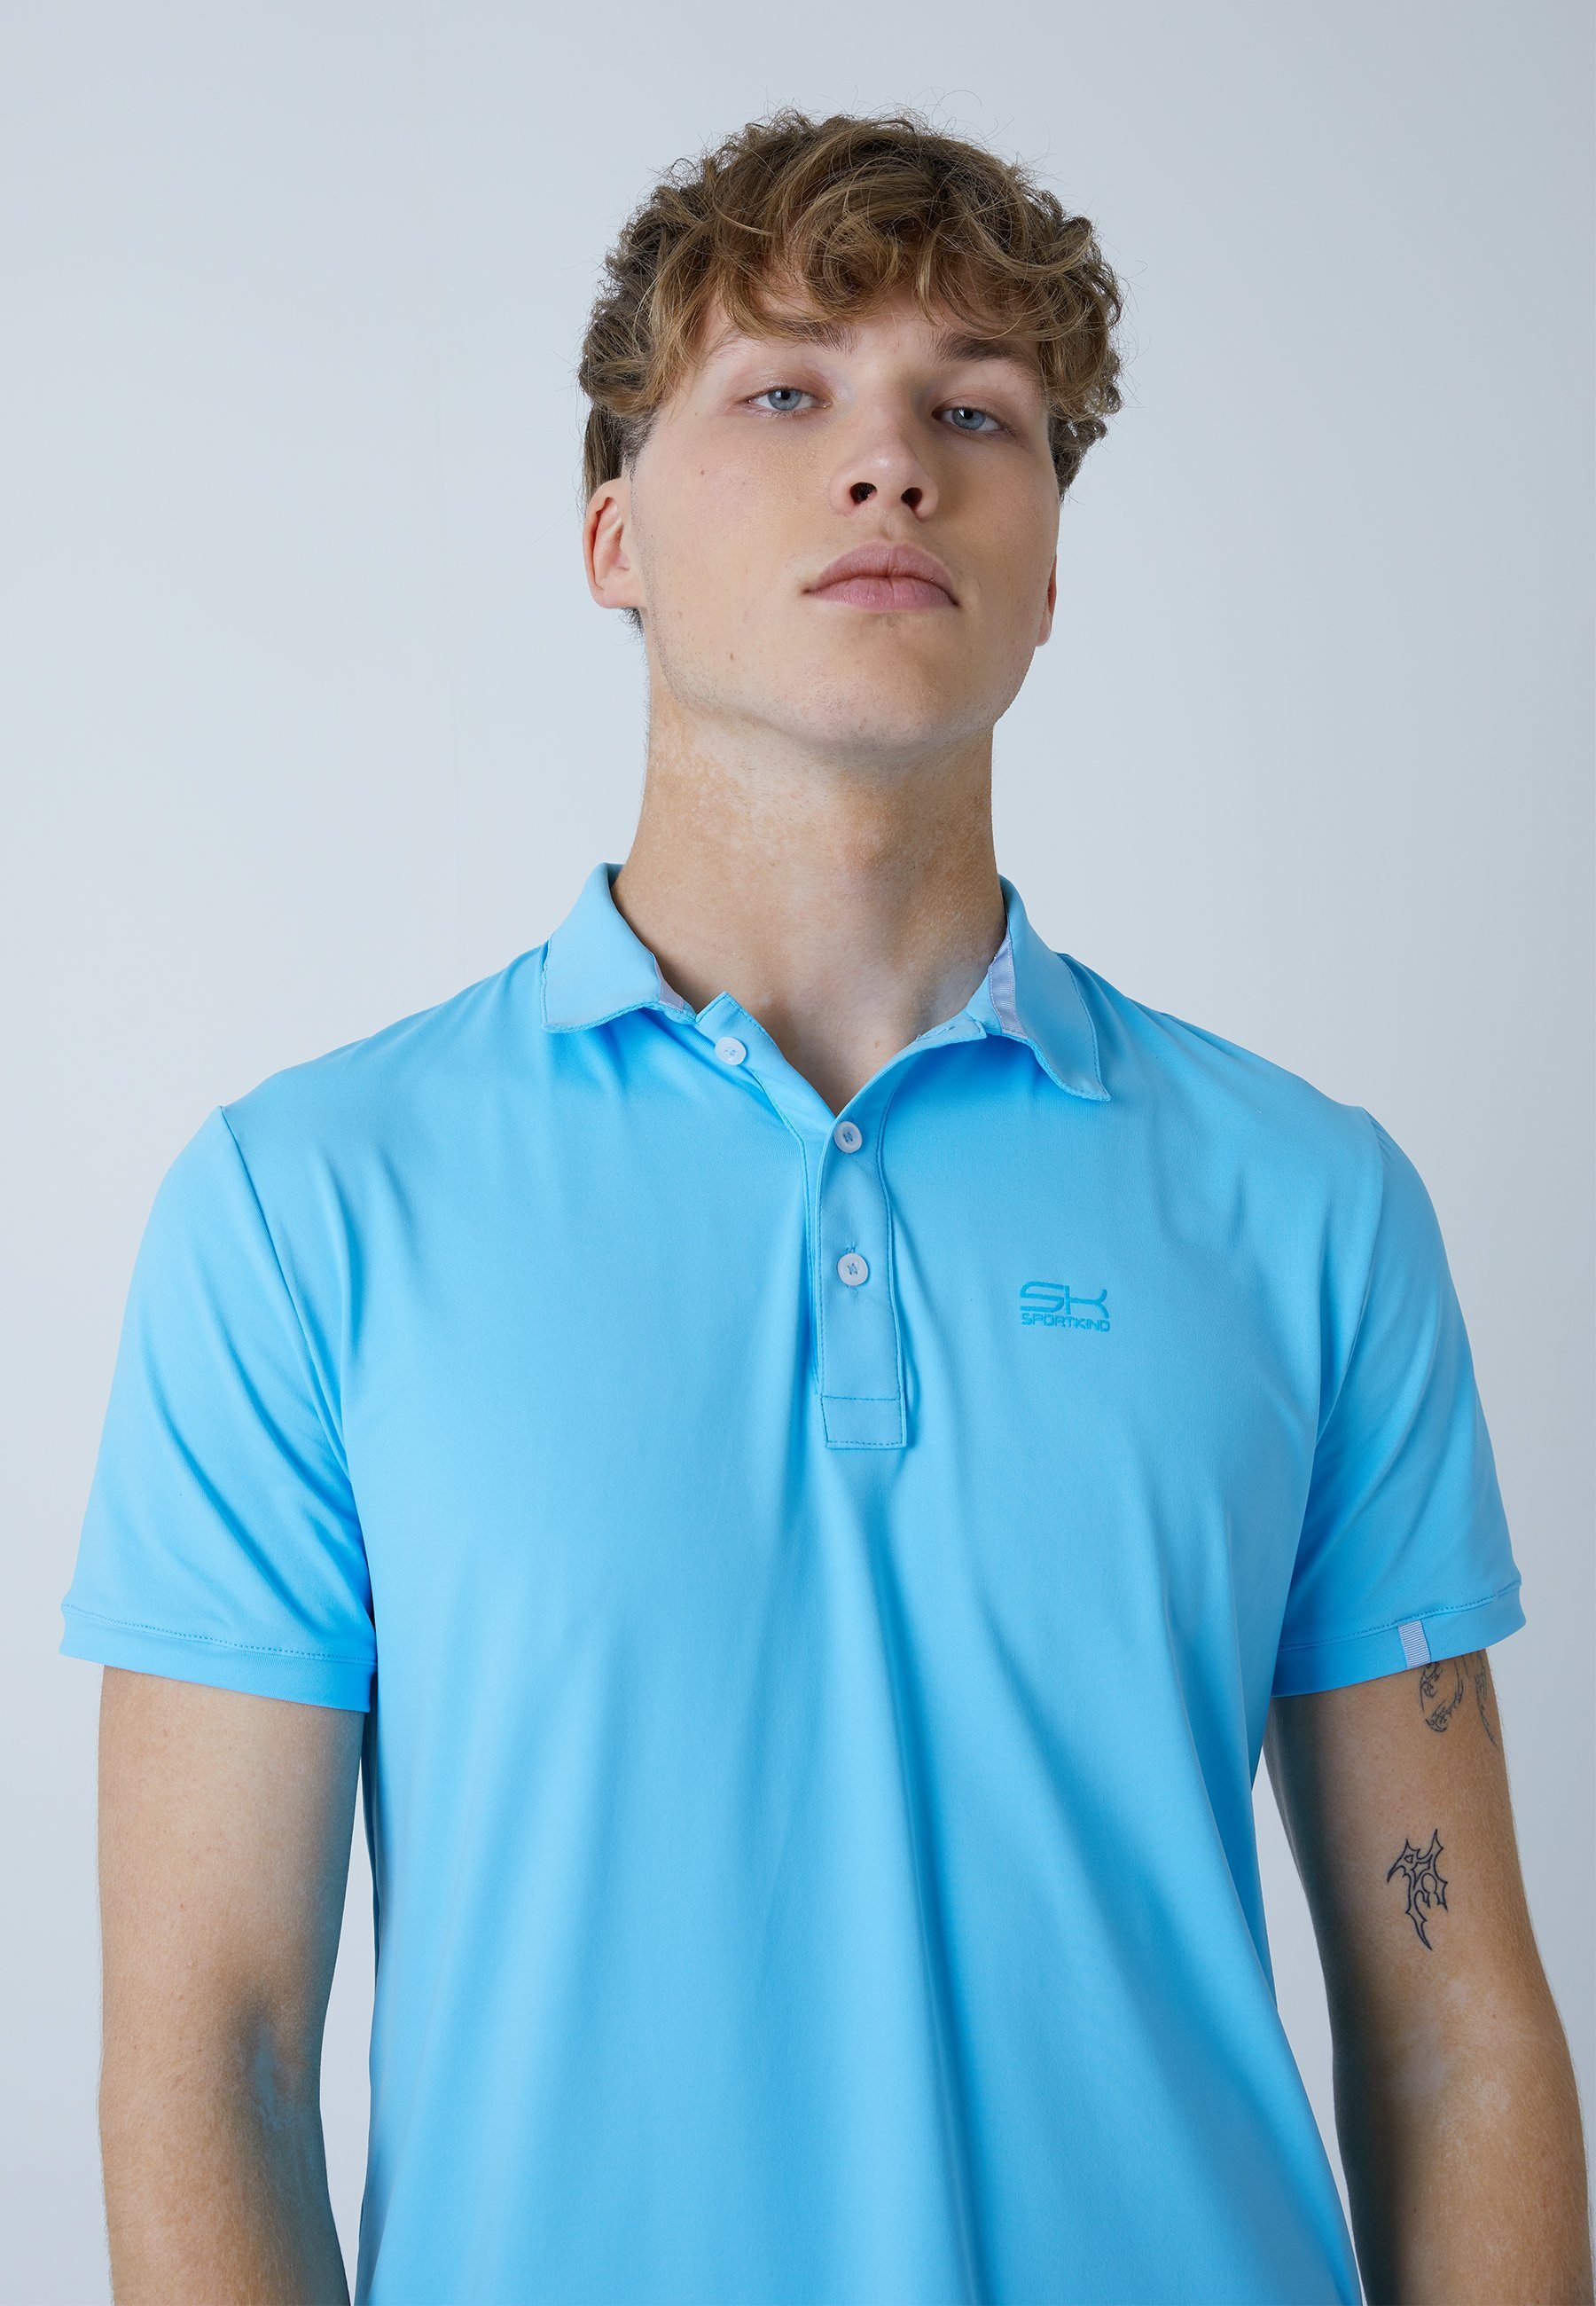 Golf Herren SPORTKIND Funktionsshirt Polo Jungen Kurzarm Shirt & hellblau